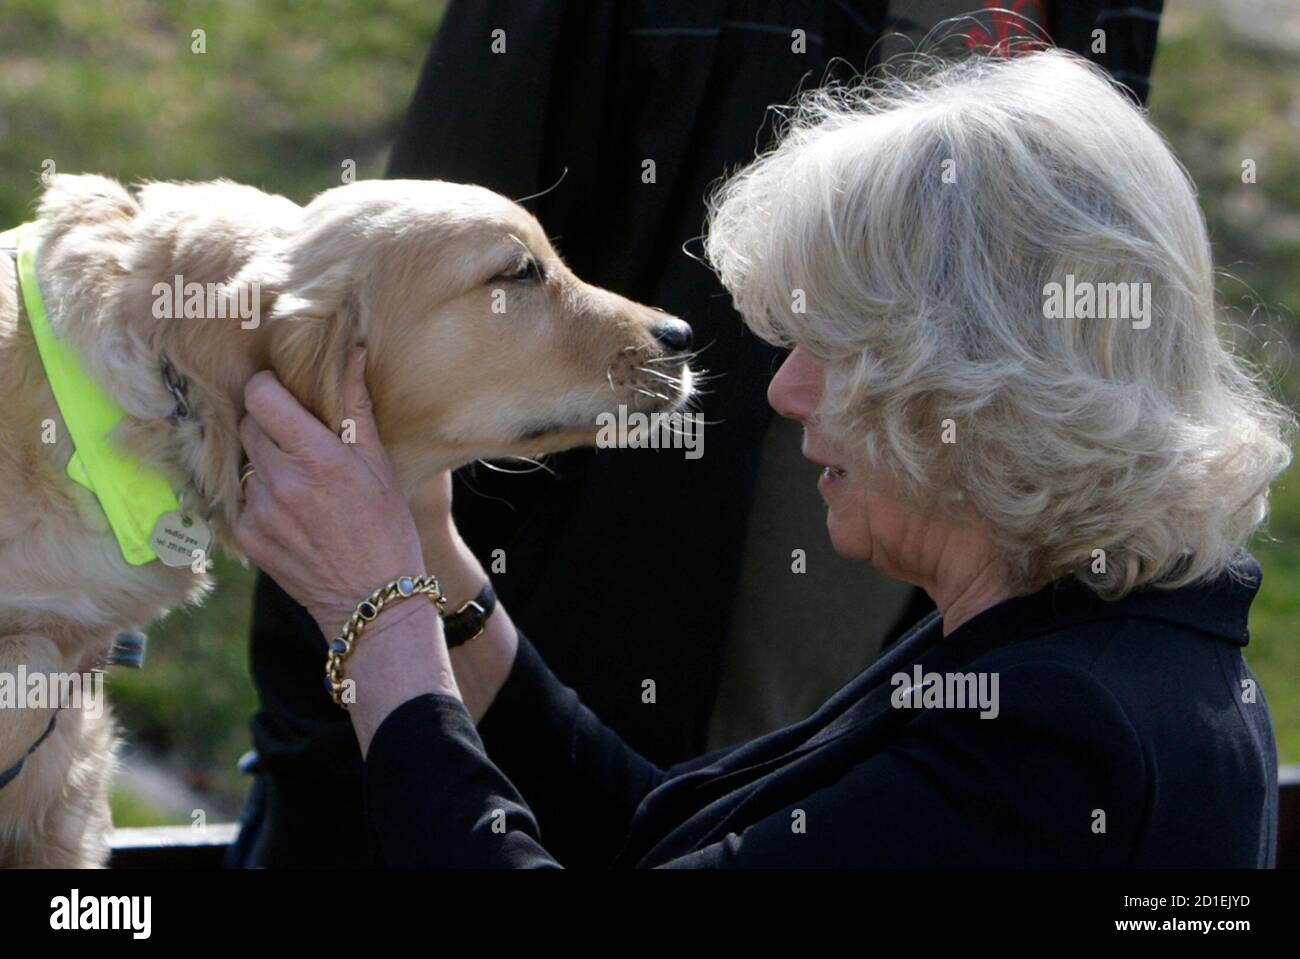 britains-camilla-duchess-of-cornwall-visits-the-guide-dog-school-in-prague-march-22-2010-reutersdavid-w-cerny-czech-republic-tags-animals-politics-royals-2D1EJYD.jpg